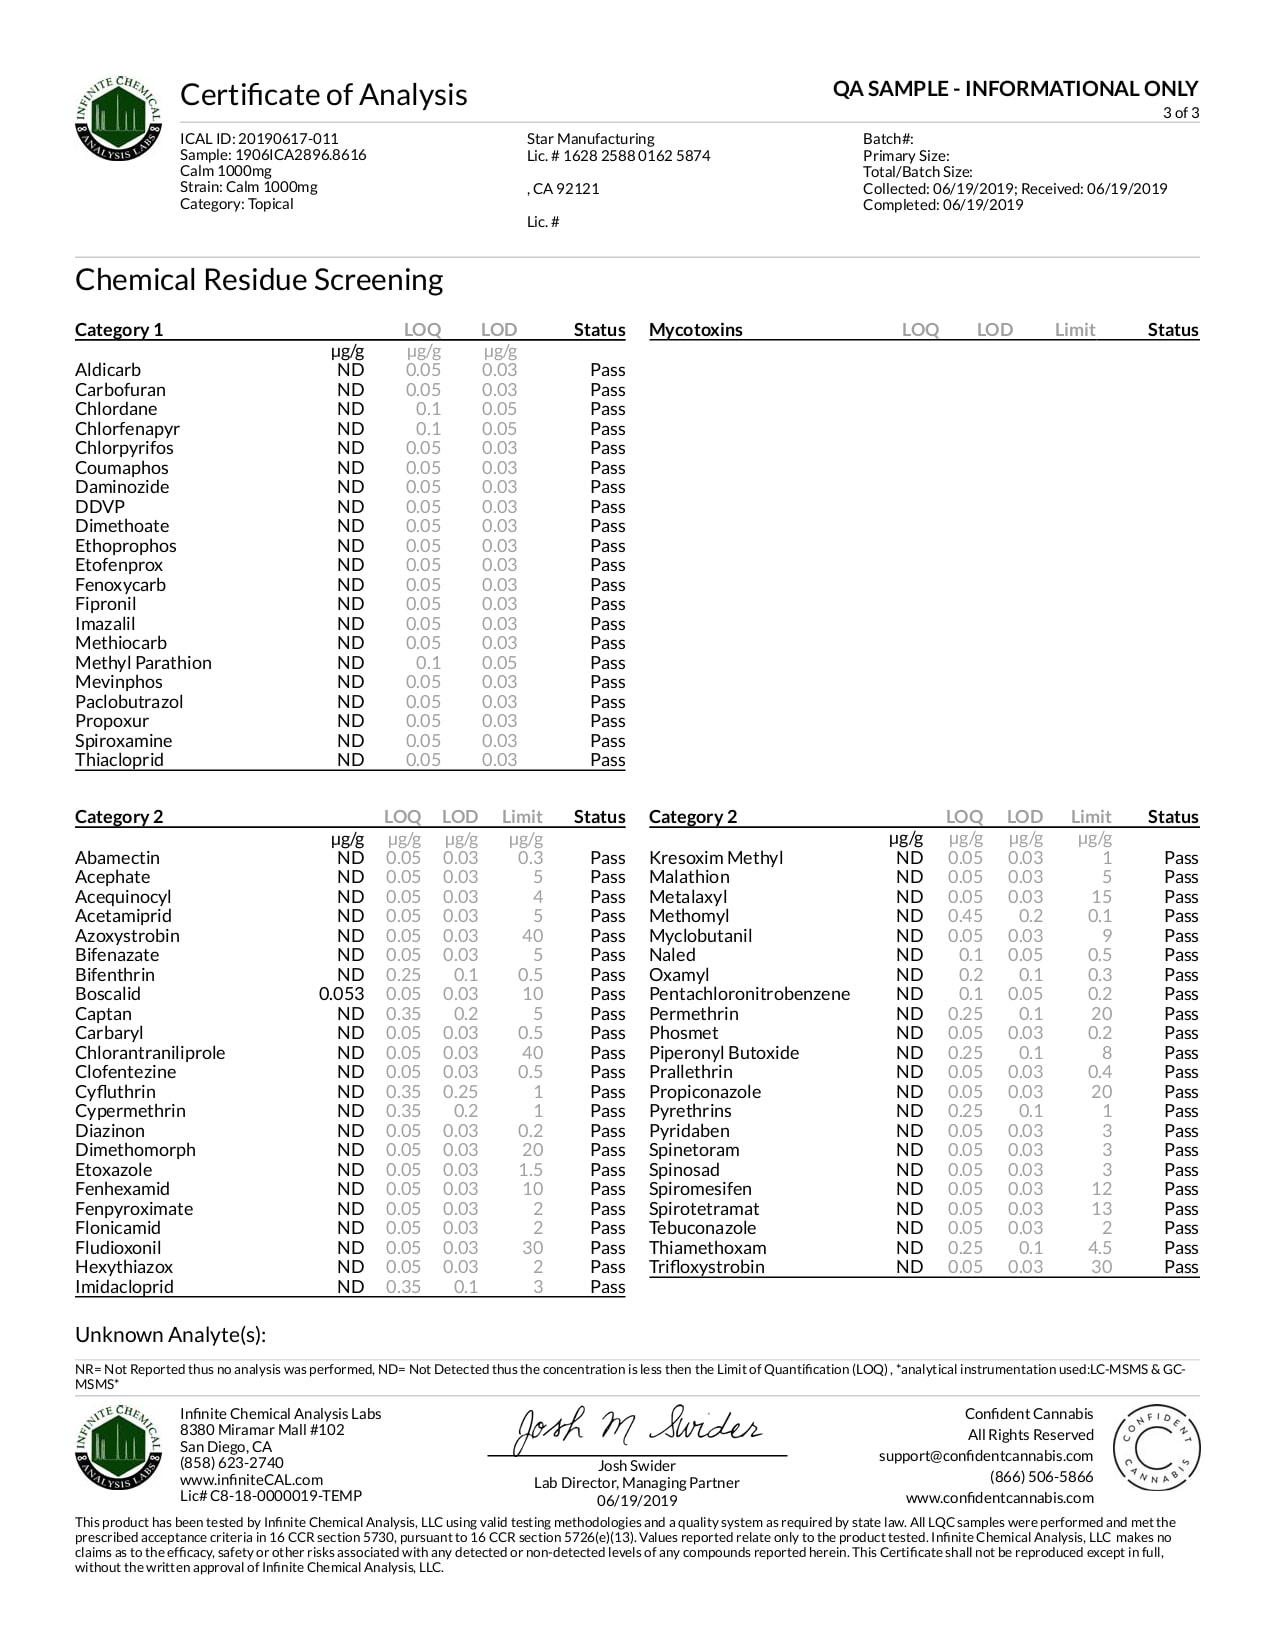 IGNITE CBD Essential Oil Roll-on Lavender 1000mg Lab Report